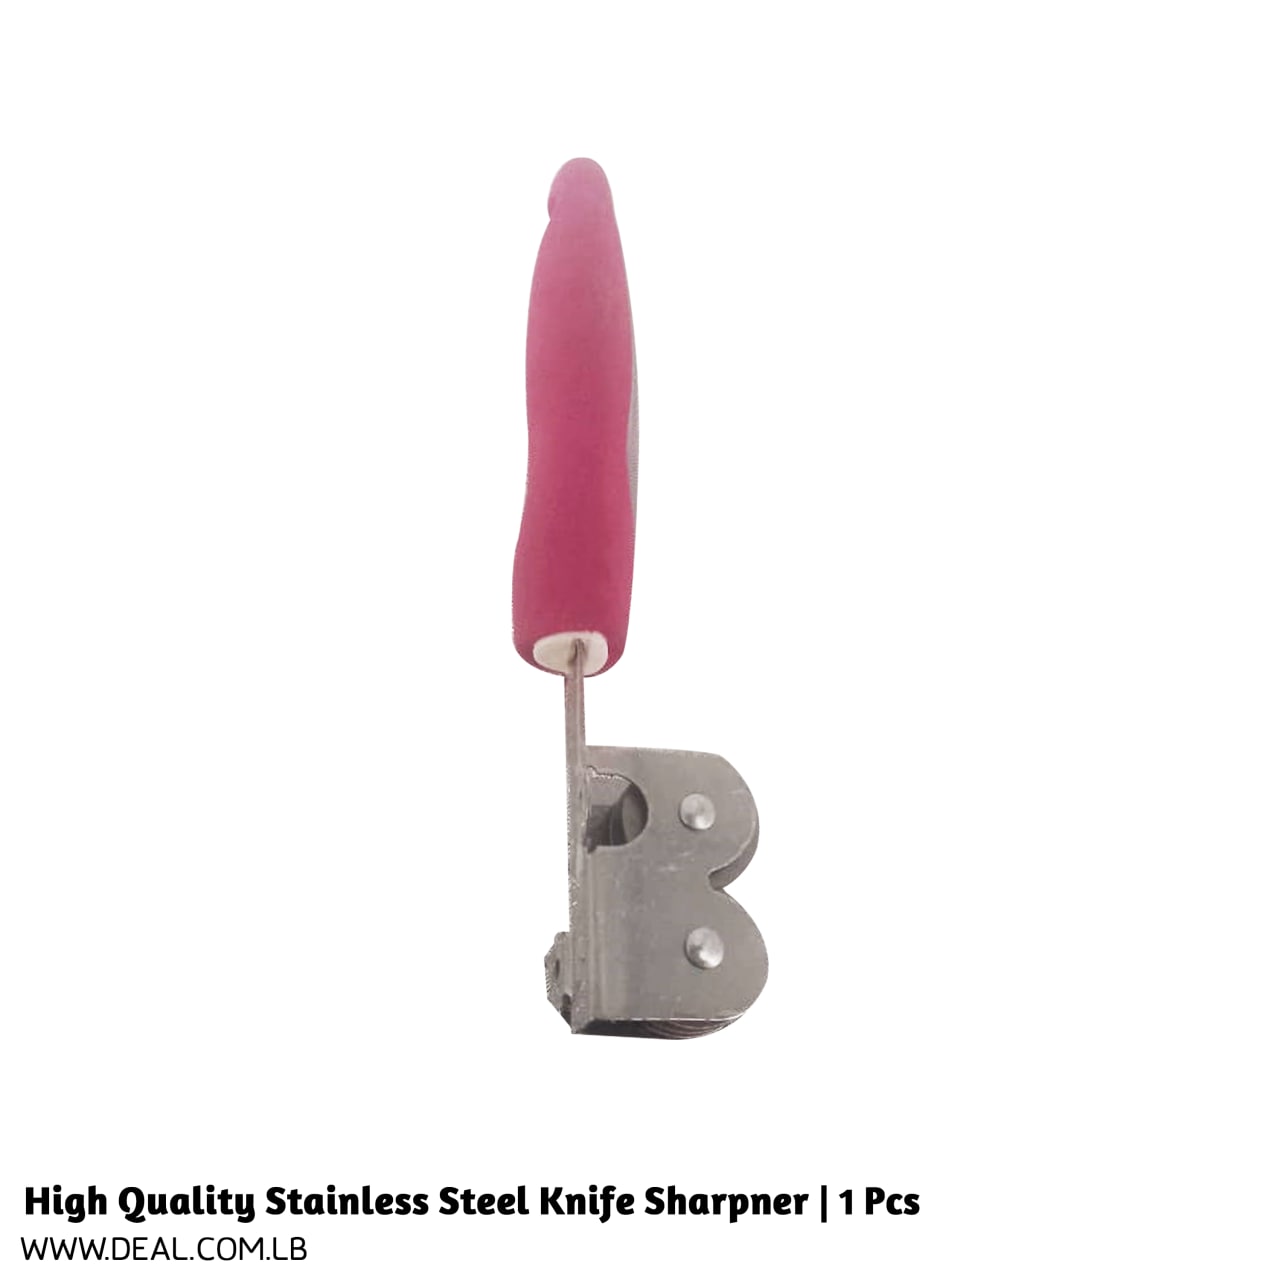 High Quality Stainless Steel Knife Sharpner | 1 Pcs